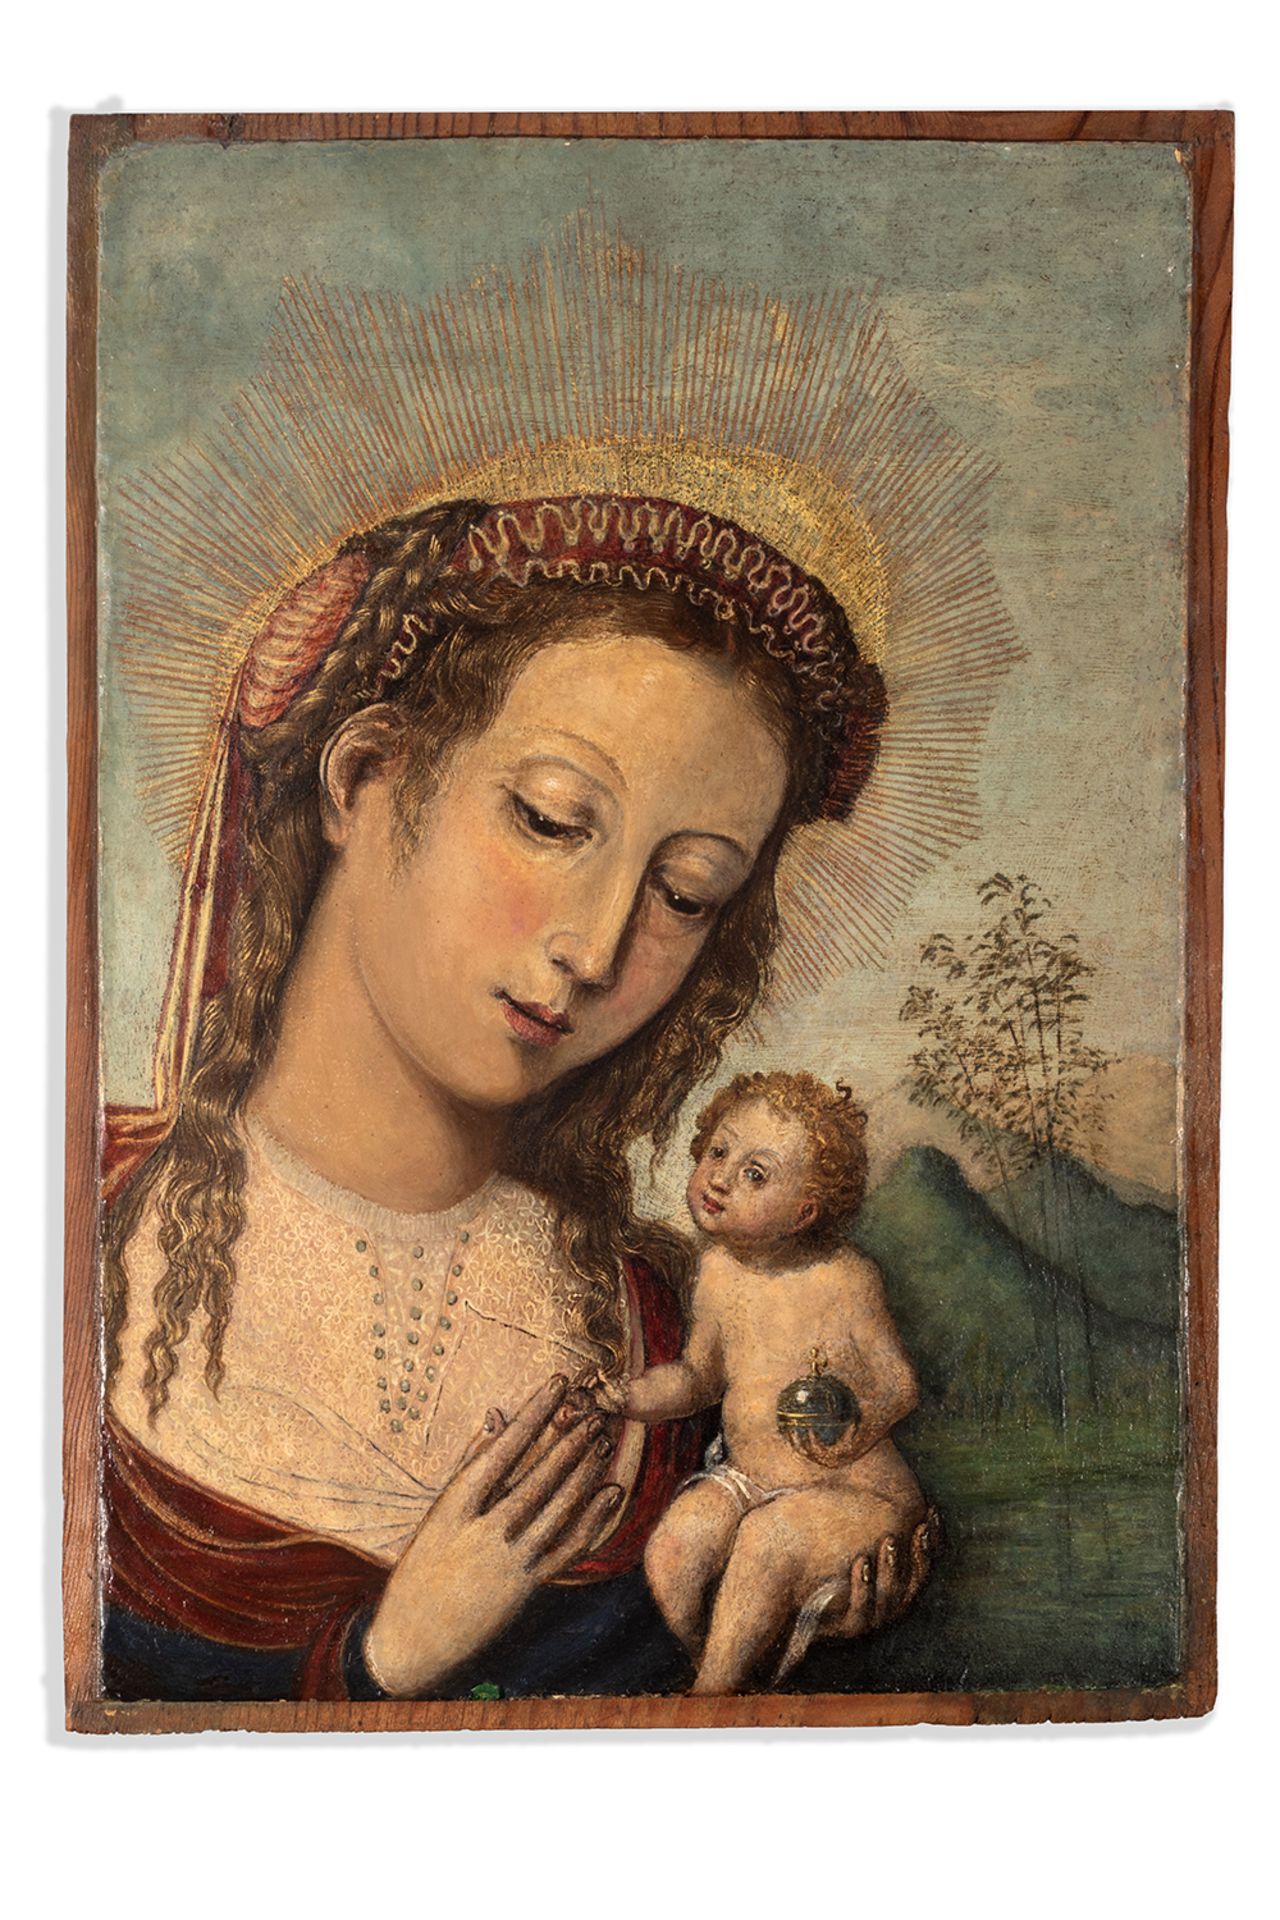 Flemish school, 16th century. Virgin with Child.